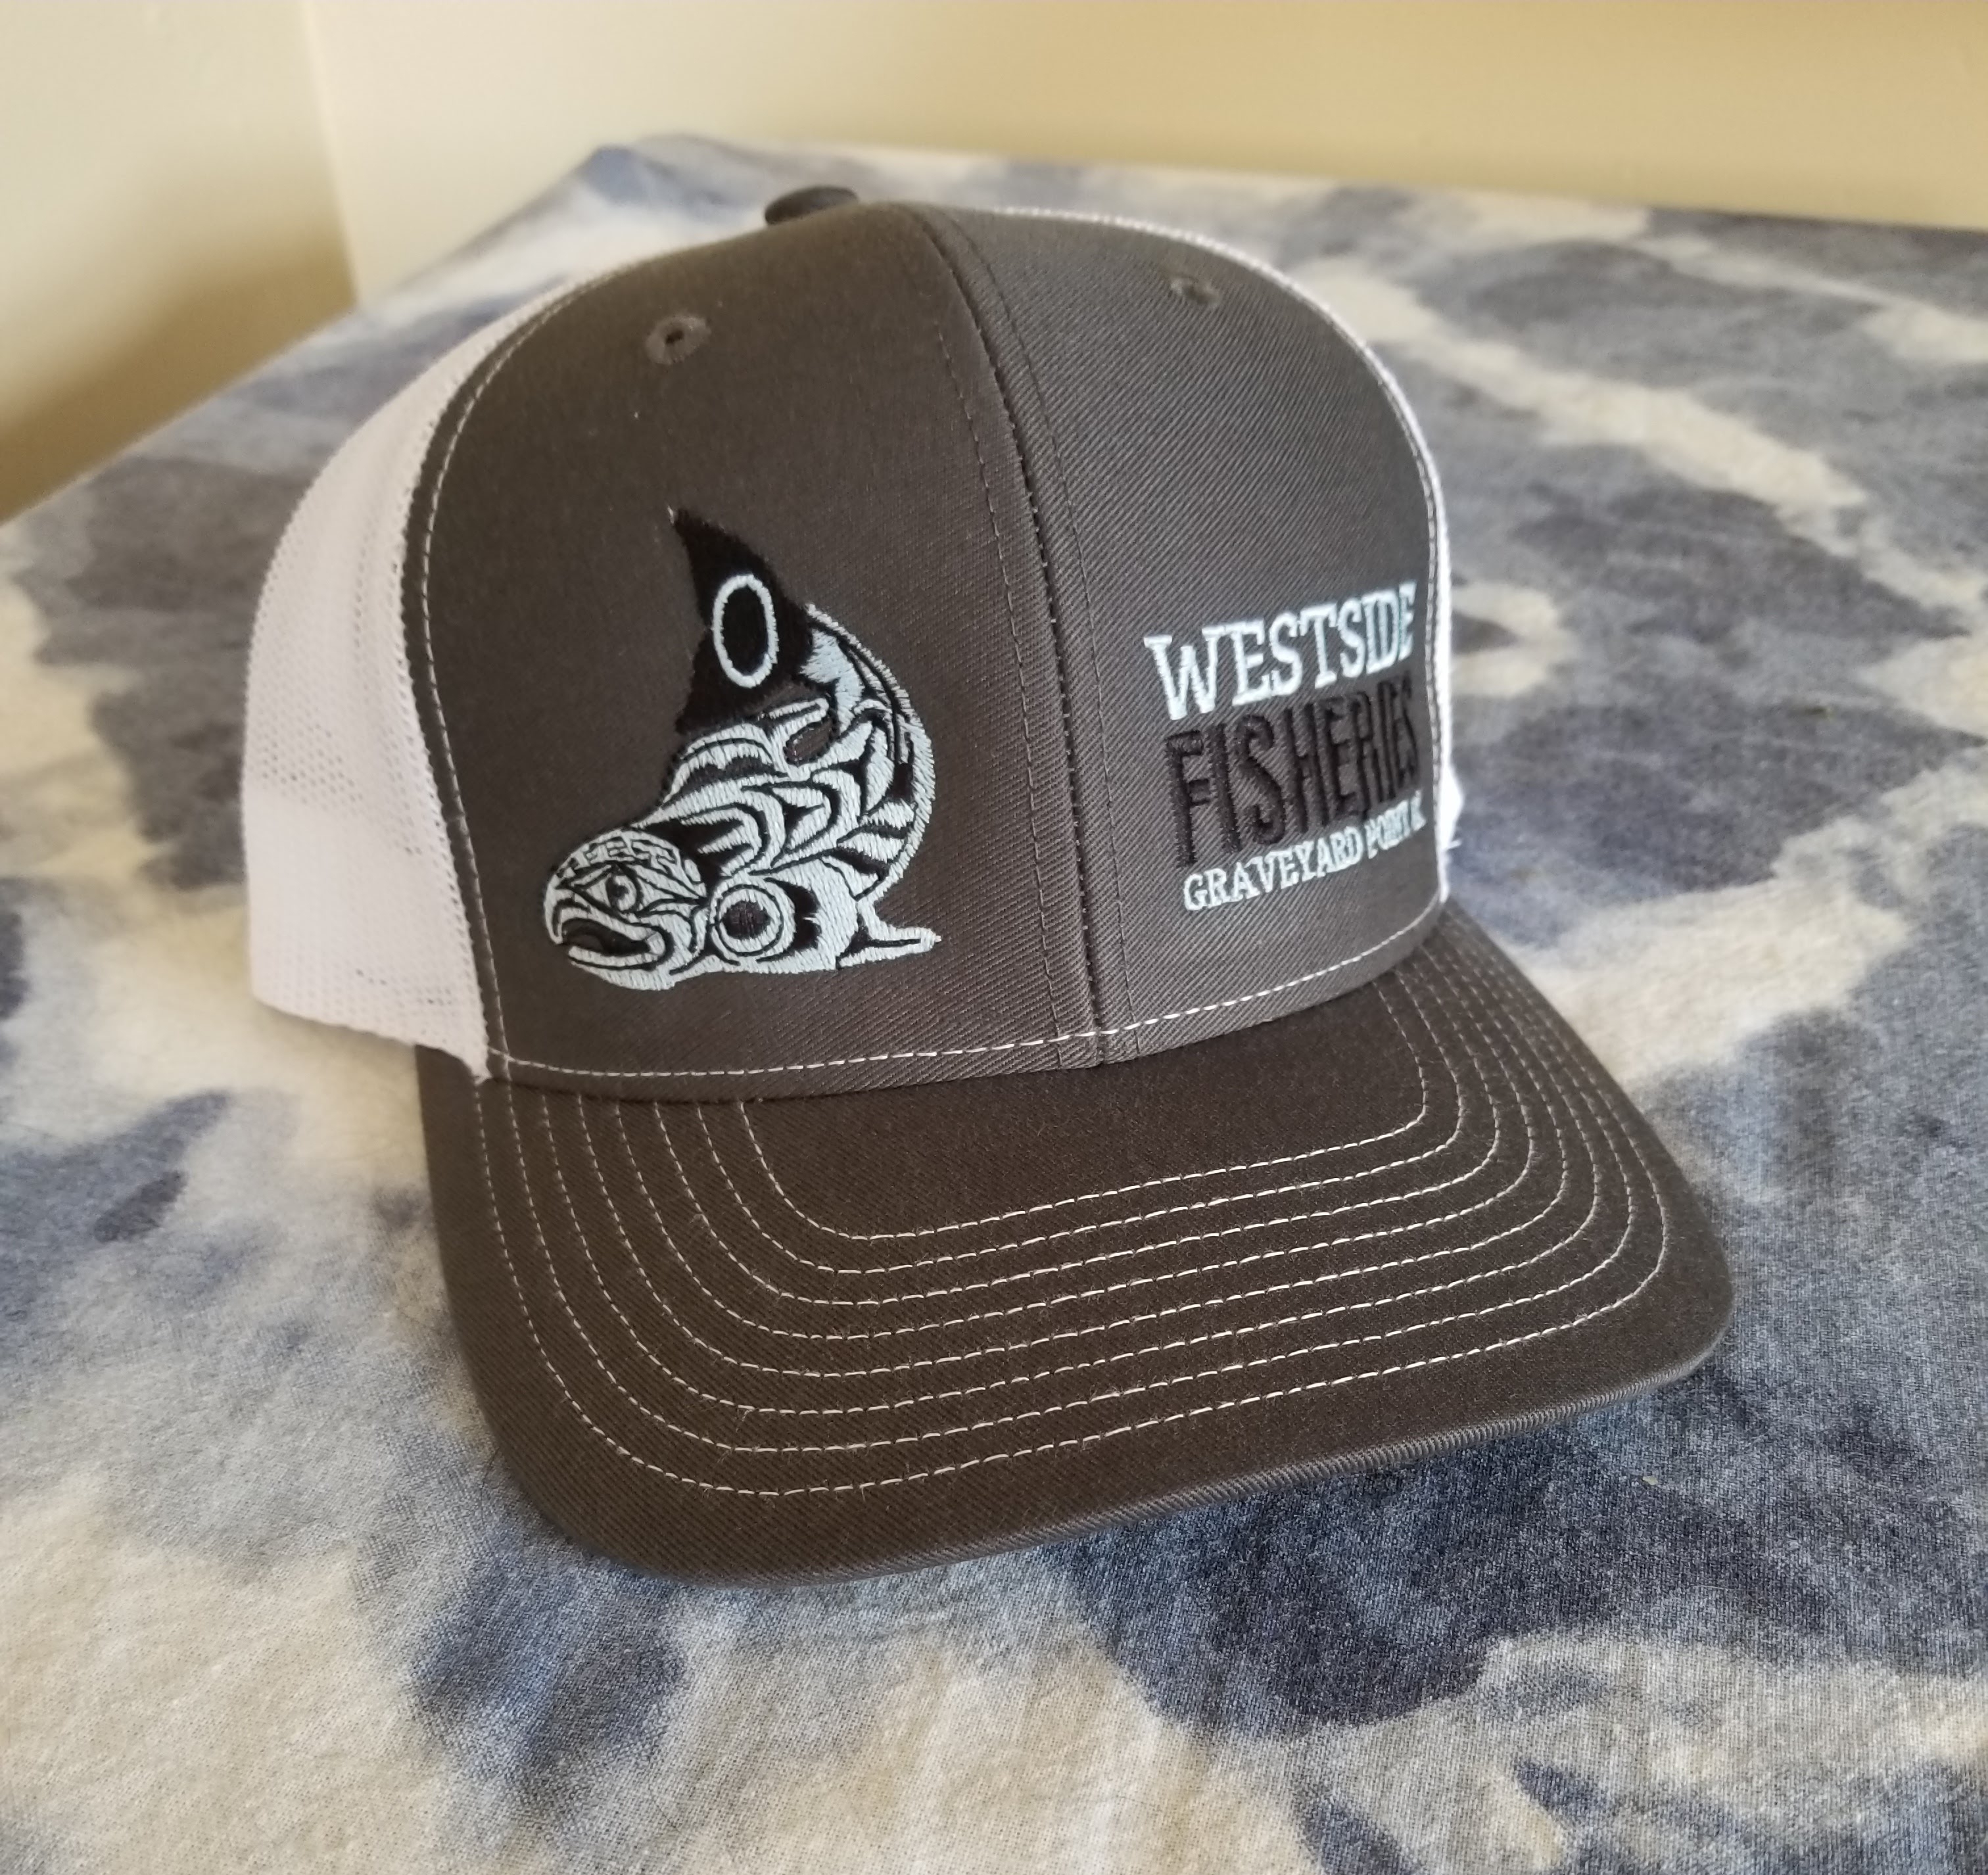 Fishing hat product sample Westside fisheries